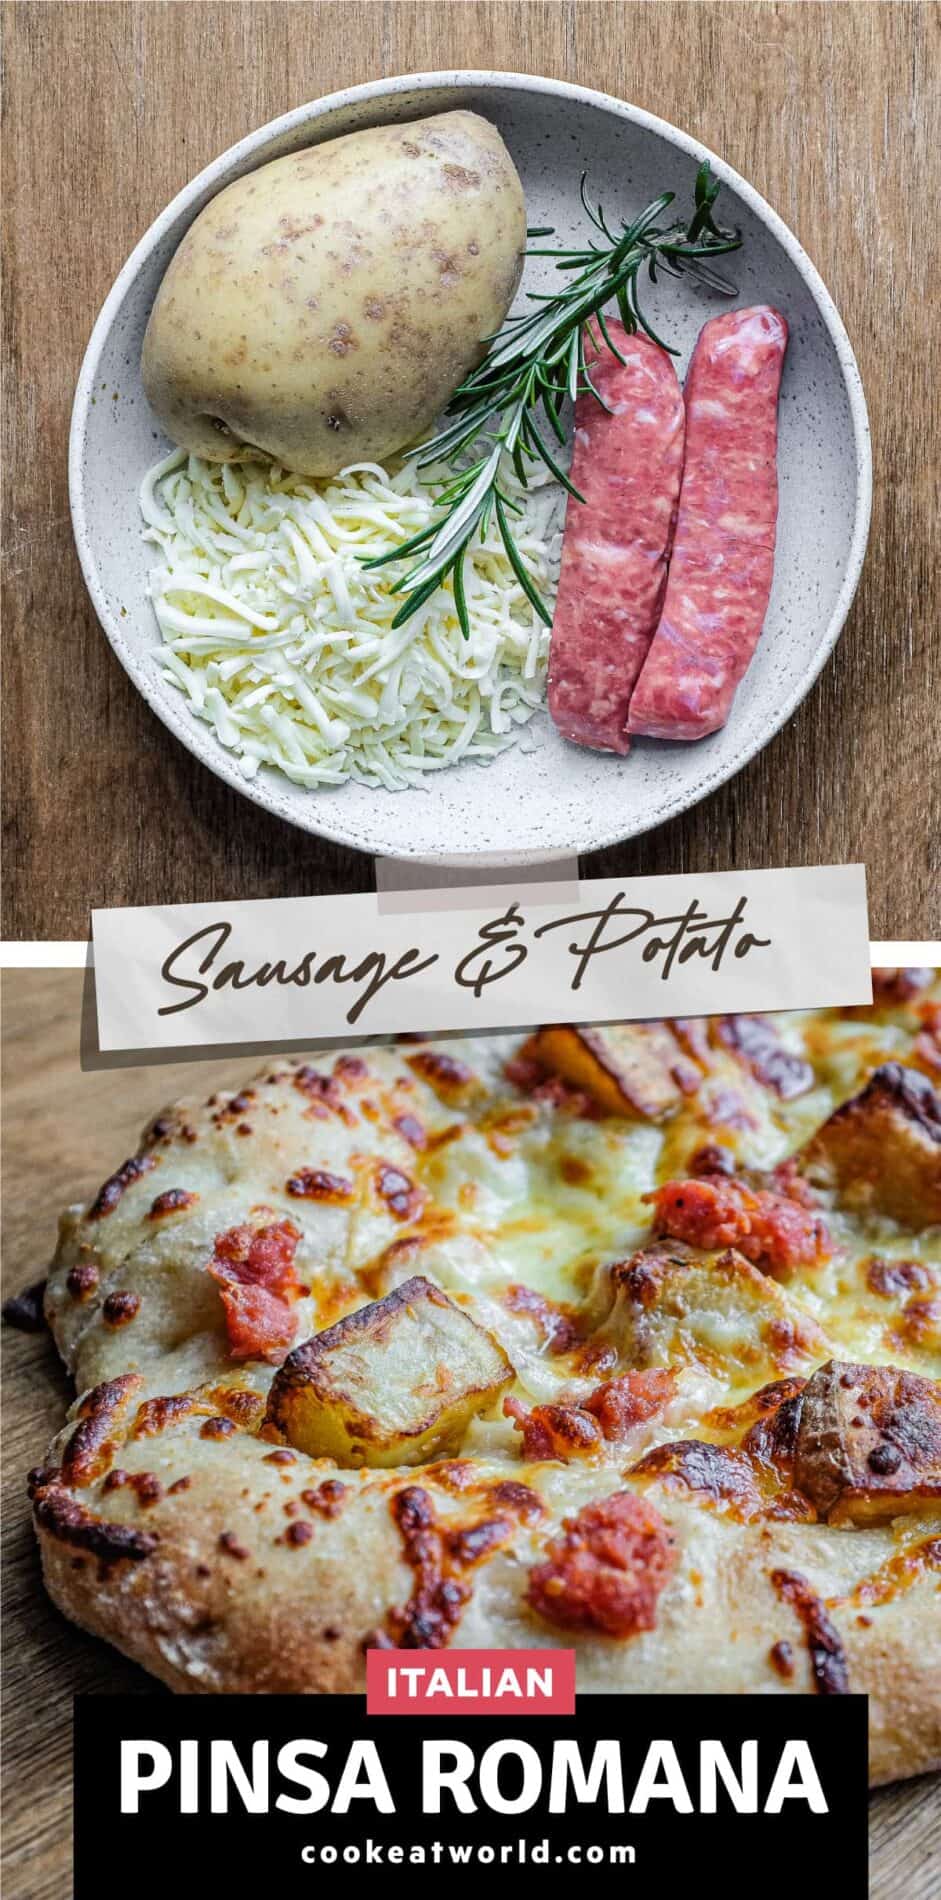 Top picture: A bowl with mozzarella, potato, rosemary and Italian sausages. Bottom Picture: A Sausage & Potato Pinsa.